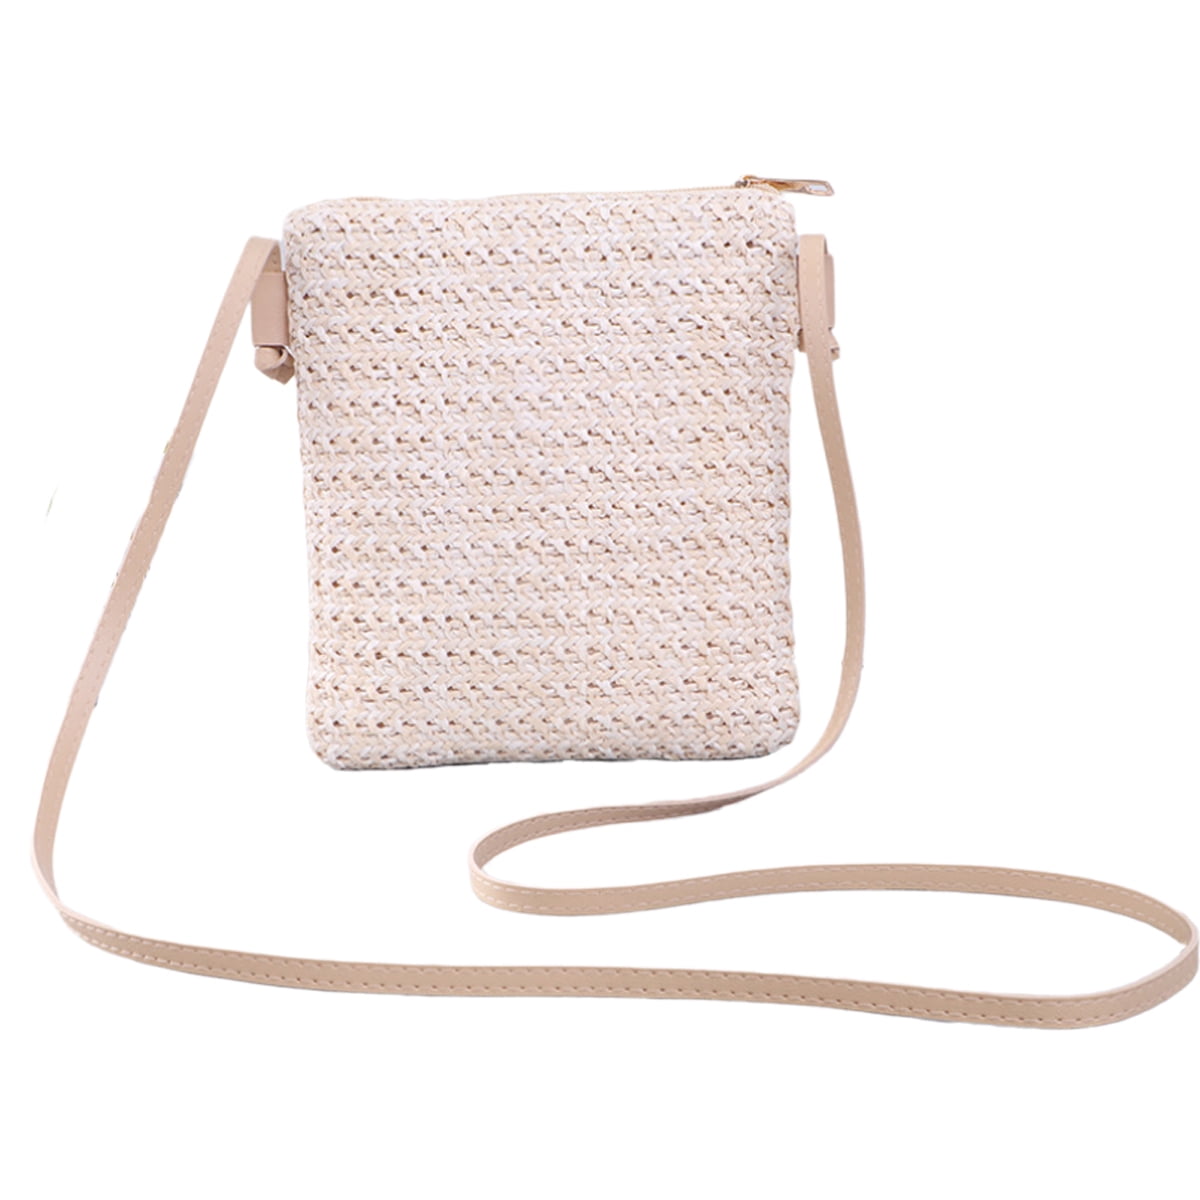 Hand-woven Genuine Leather Women's Shell Handbag Tote Purse Single Shoulder Bag 